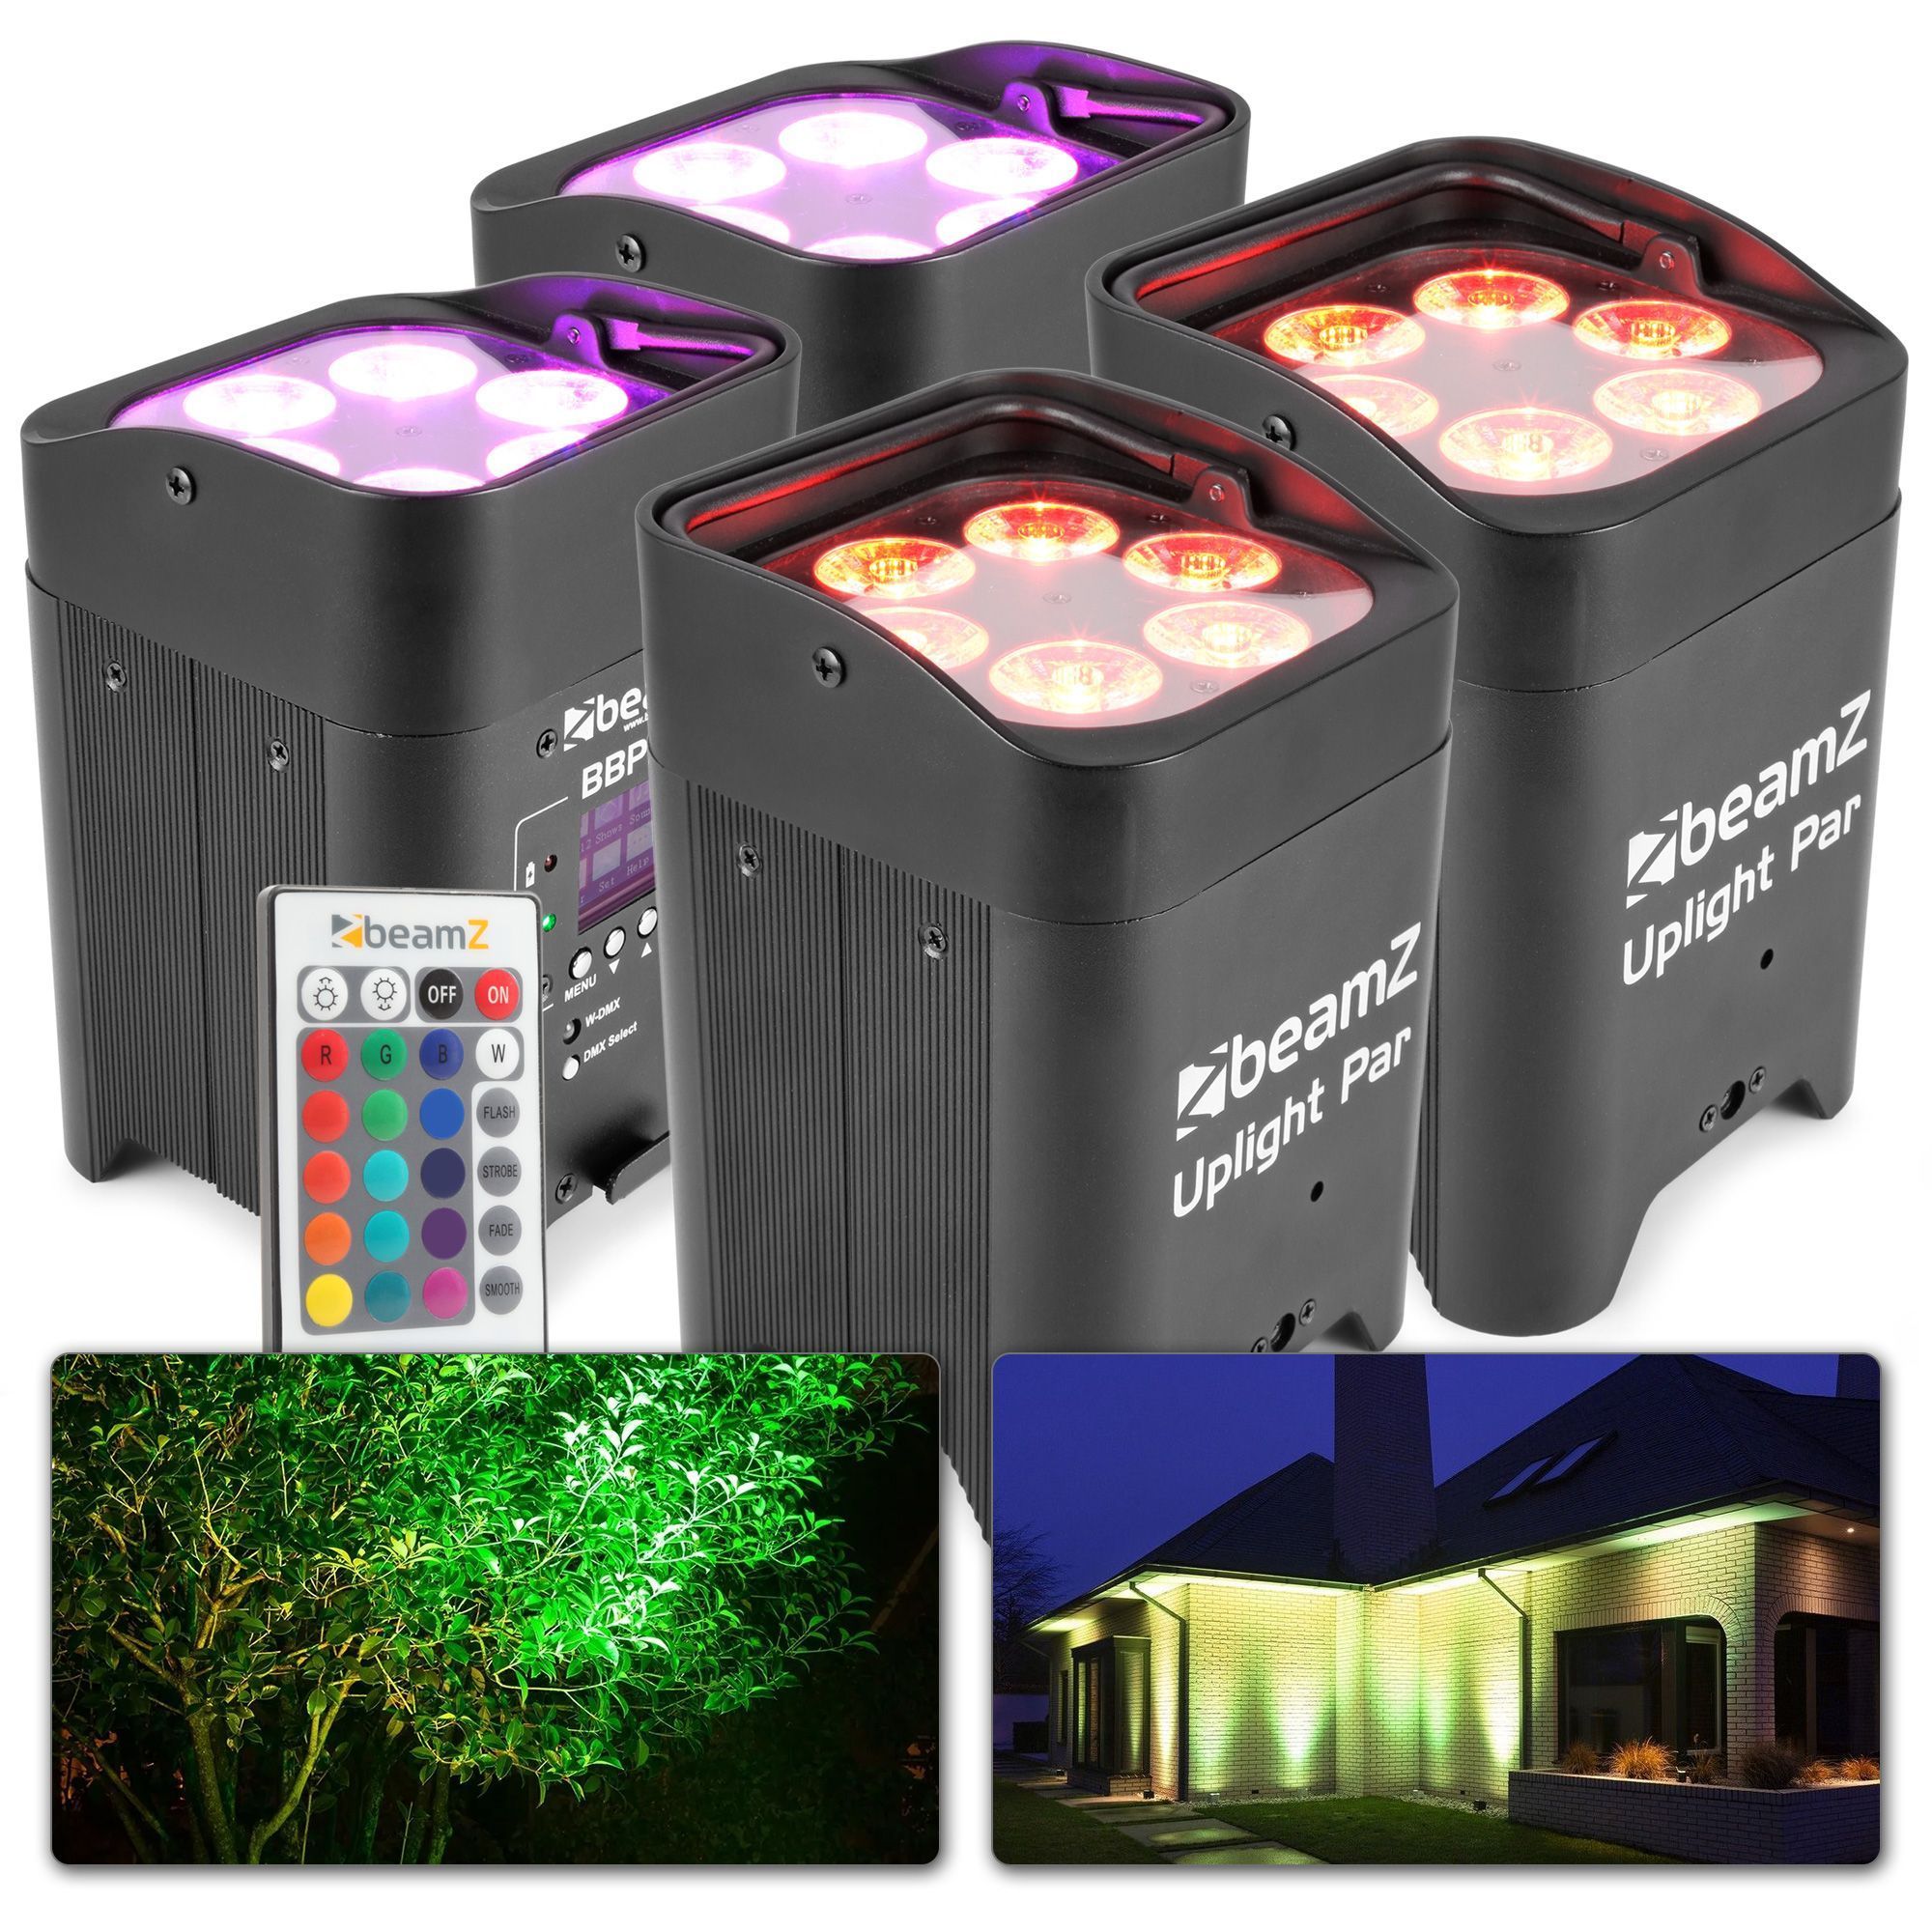 Uplighter LED - BeamZ BBP96 - Set van 4 Uplights met 6x 12W LED's per spot